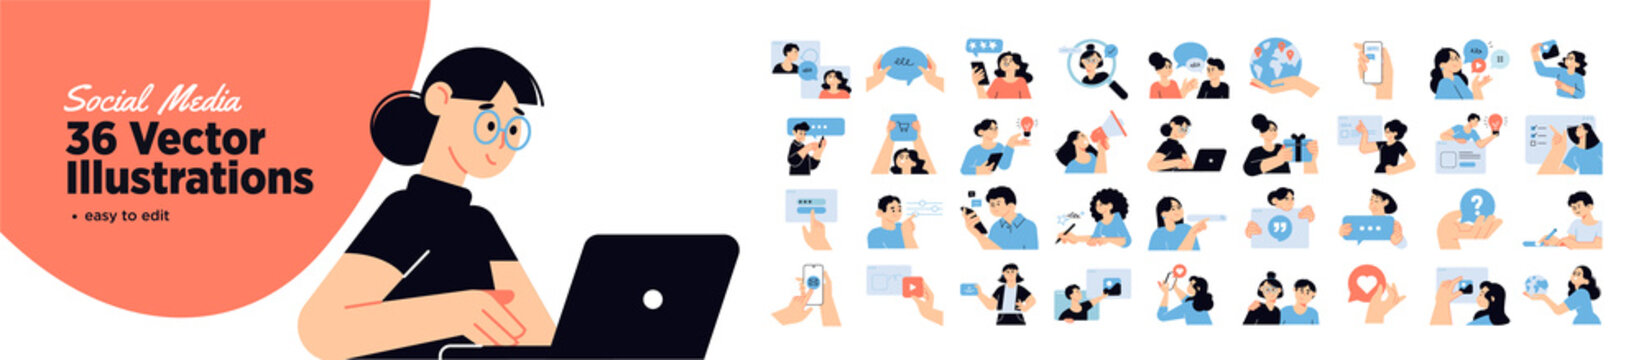 Set of social media people illustrations. Flat design vector illustrations of social network, digital marketing, online communication, internet services. 